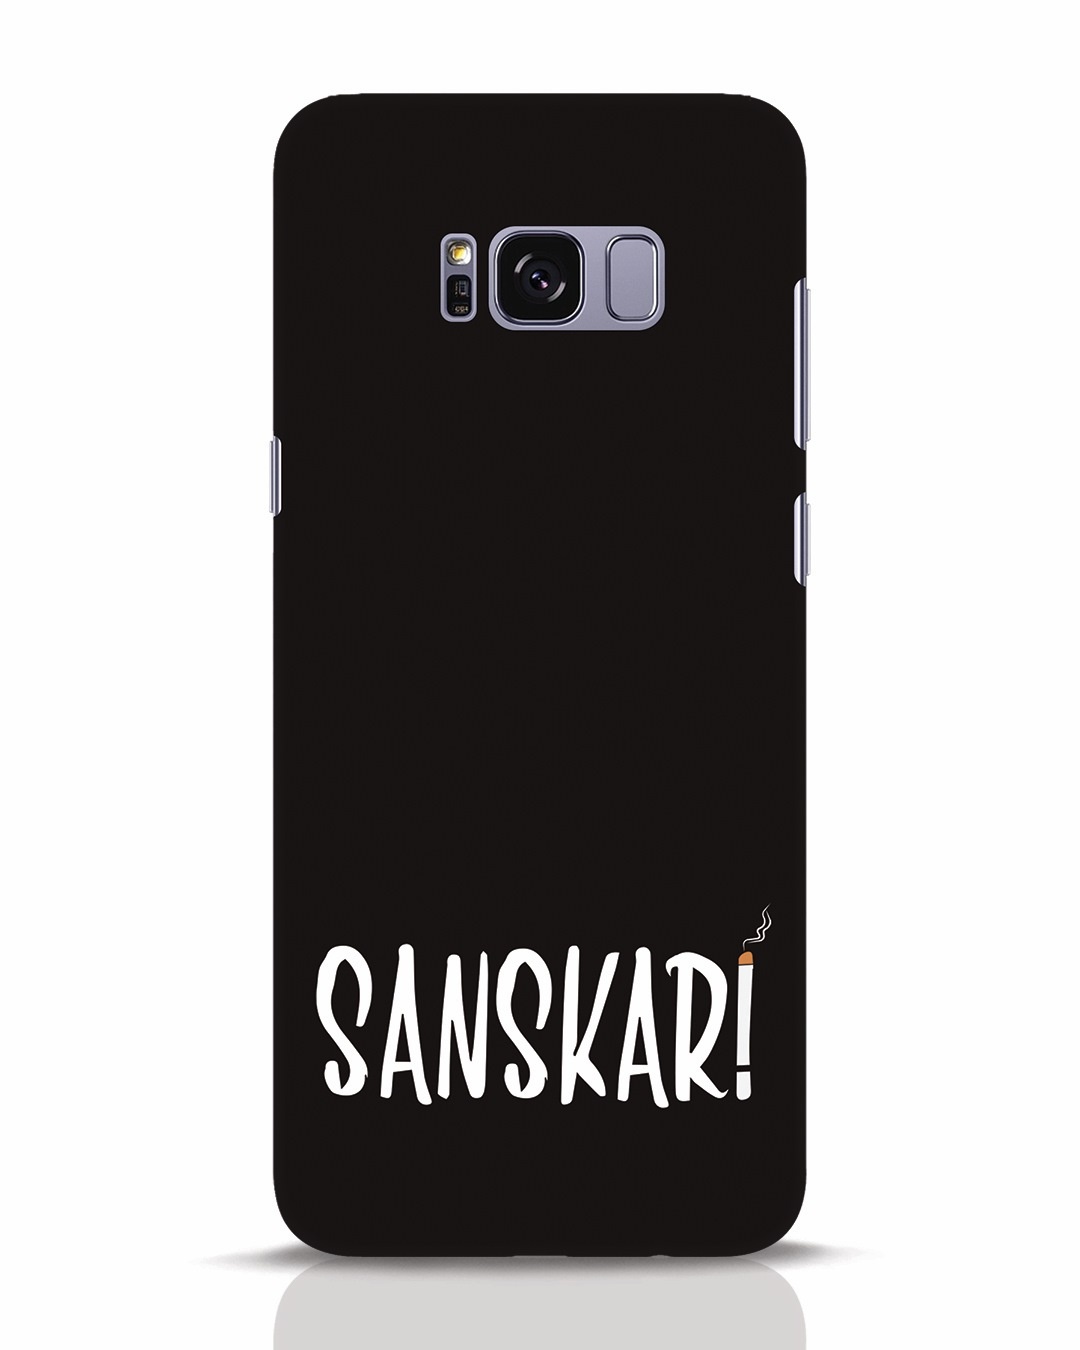 Sanskari Samsung Galaxy S8 Plus Mobile Cover Samsung Galaxy S8 Plus Mobile Covers Bewakoof.com